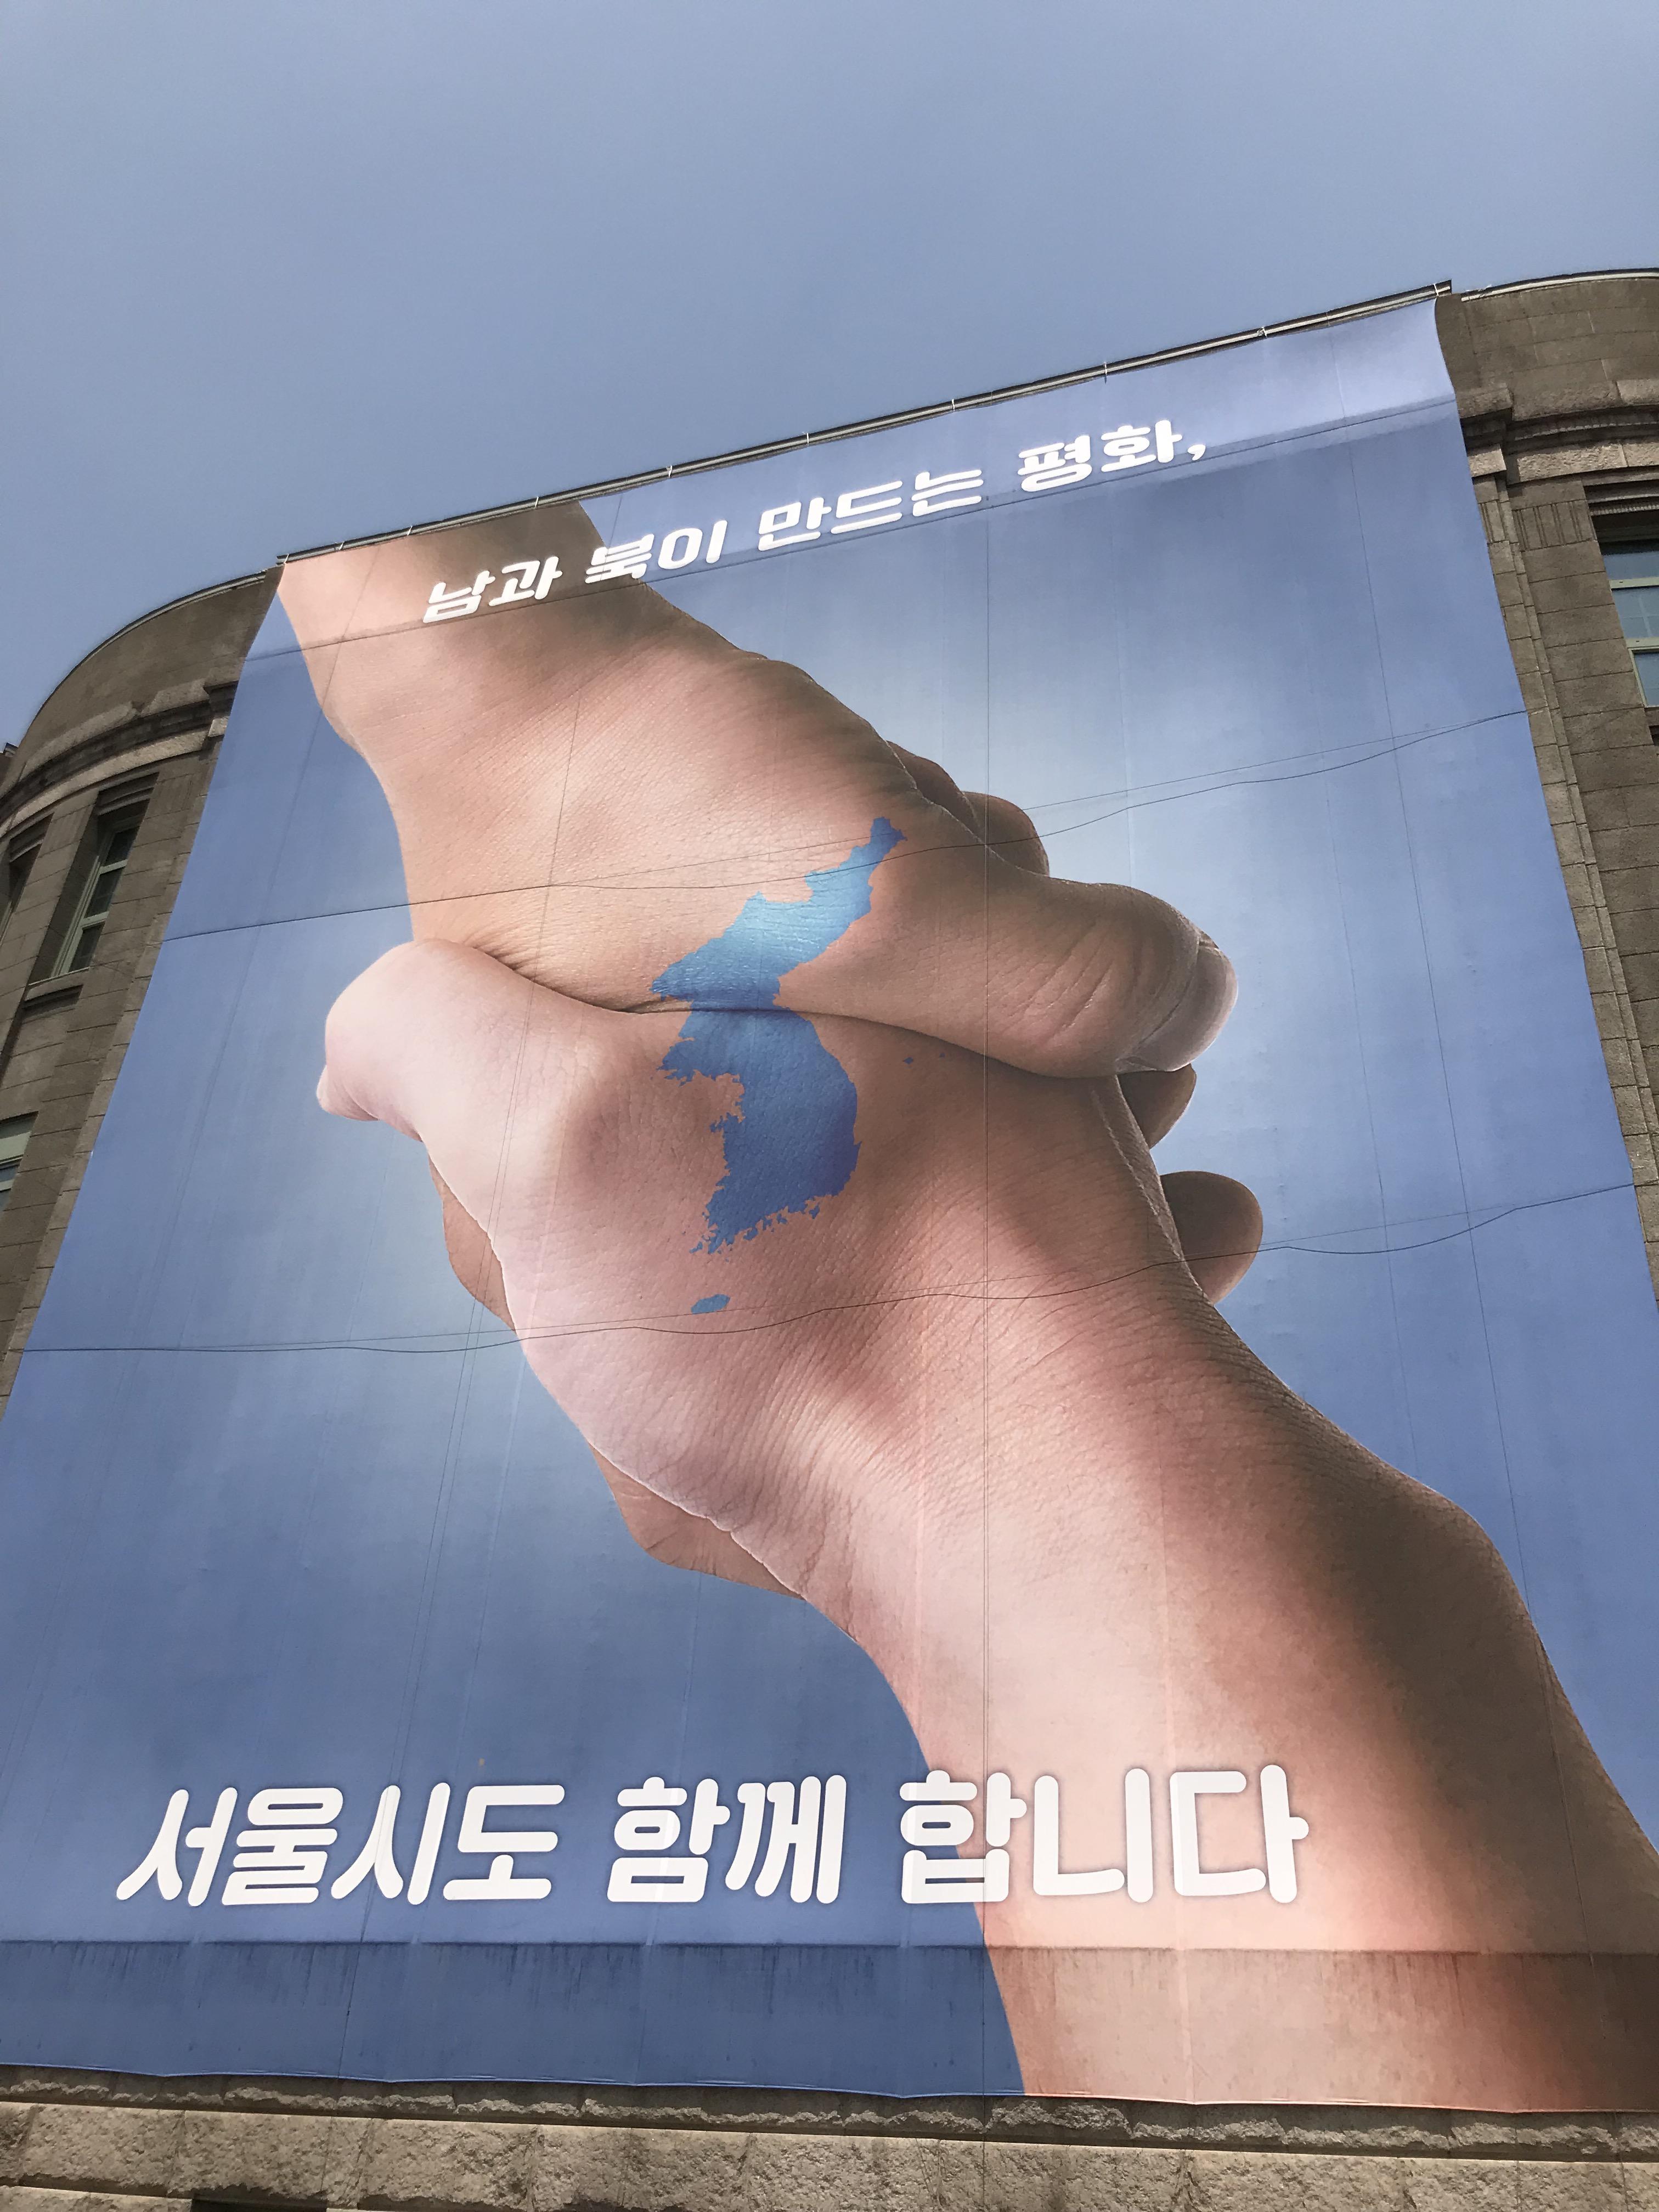 One Korea is Best Korea poster in Seoul